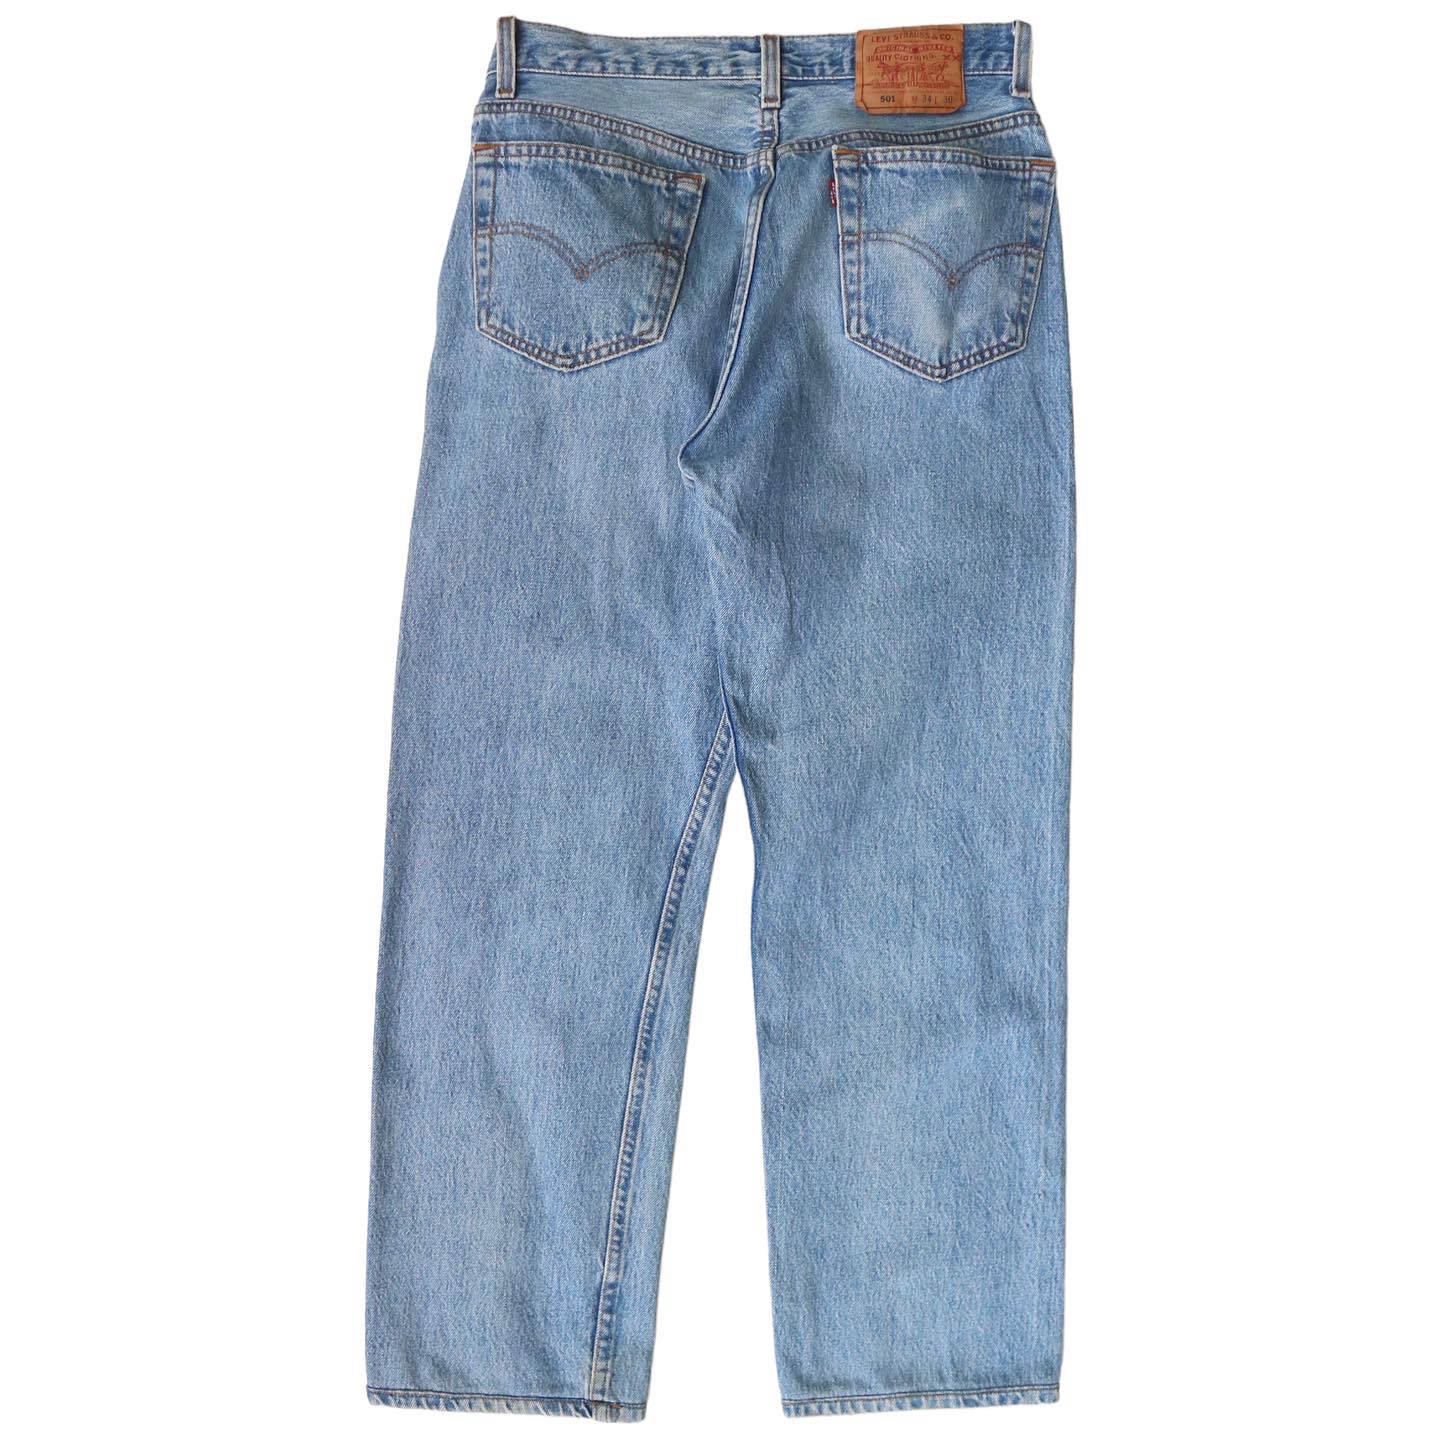 90s Levi's 501 USA Denim Jeans Size 32 denimister